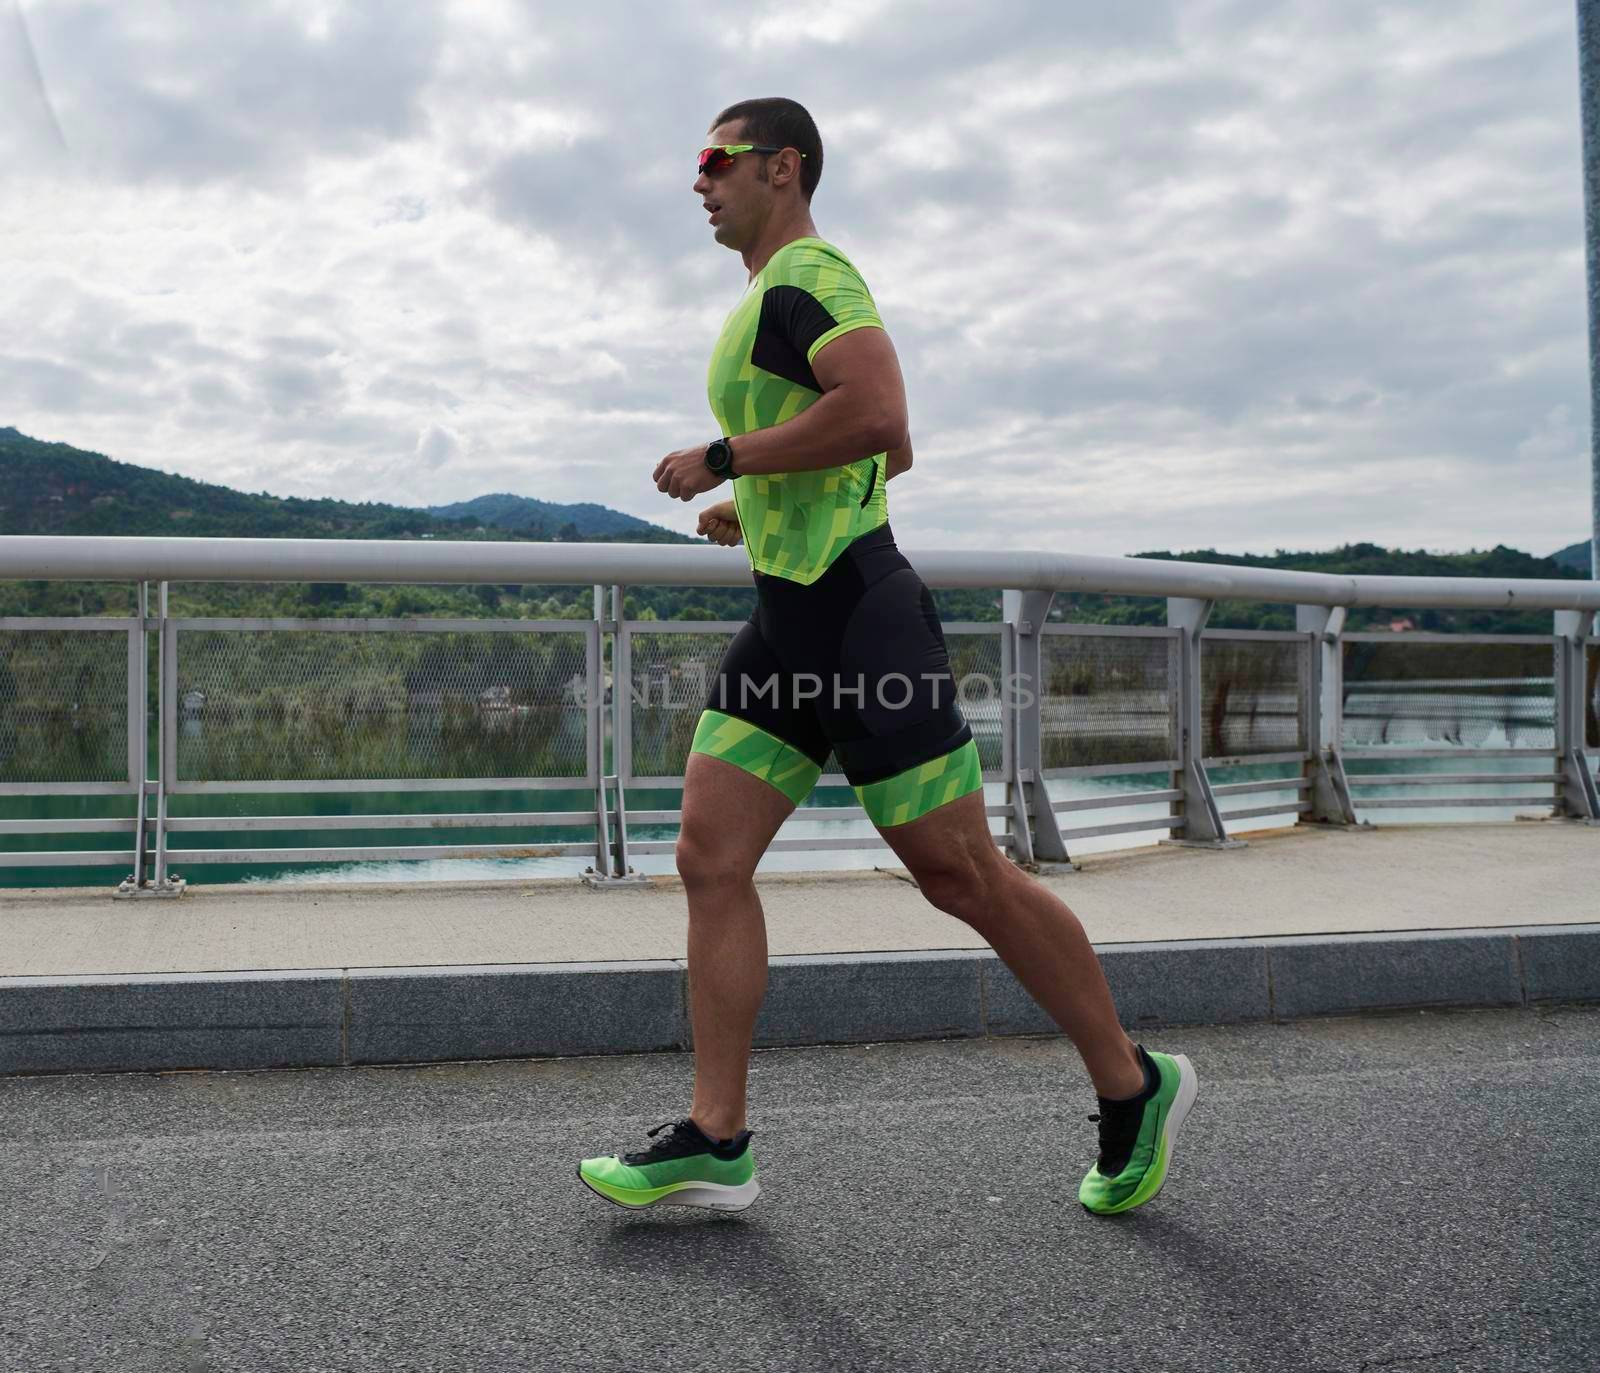 triathlon athlete running on street urban enviroment morning training workout